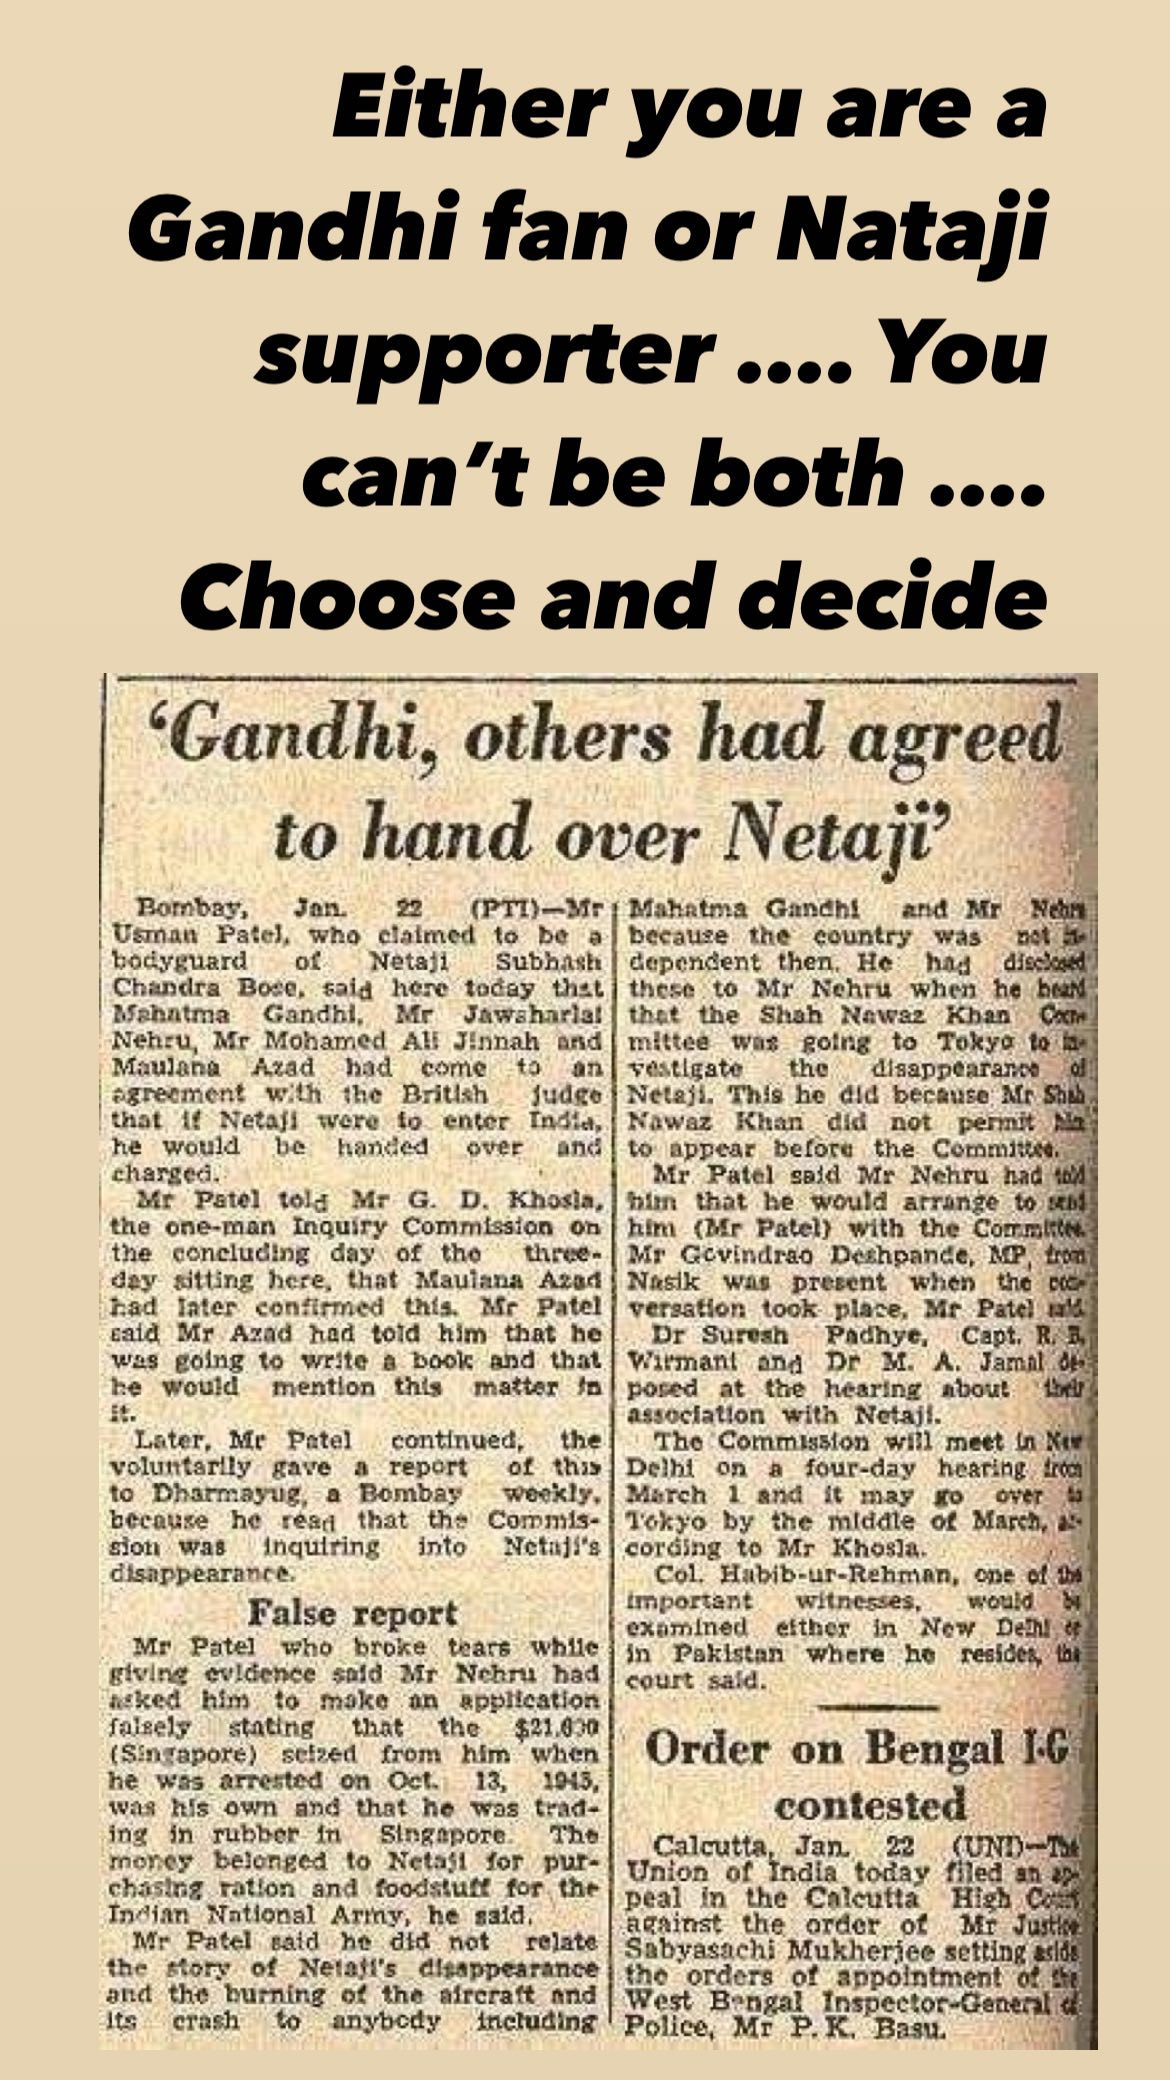 Kangana Ranaut shares post about Mahatma Gandhi, says 'offering another  cheek' gets 'bheekh', not freedom | Bollywood - Hindustan Times